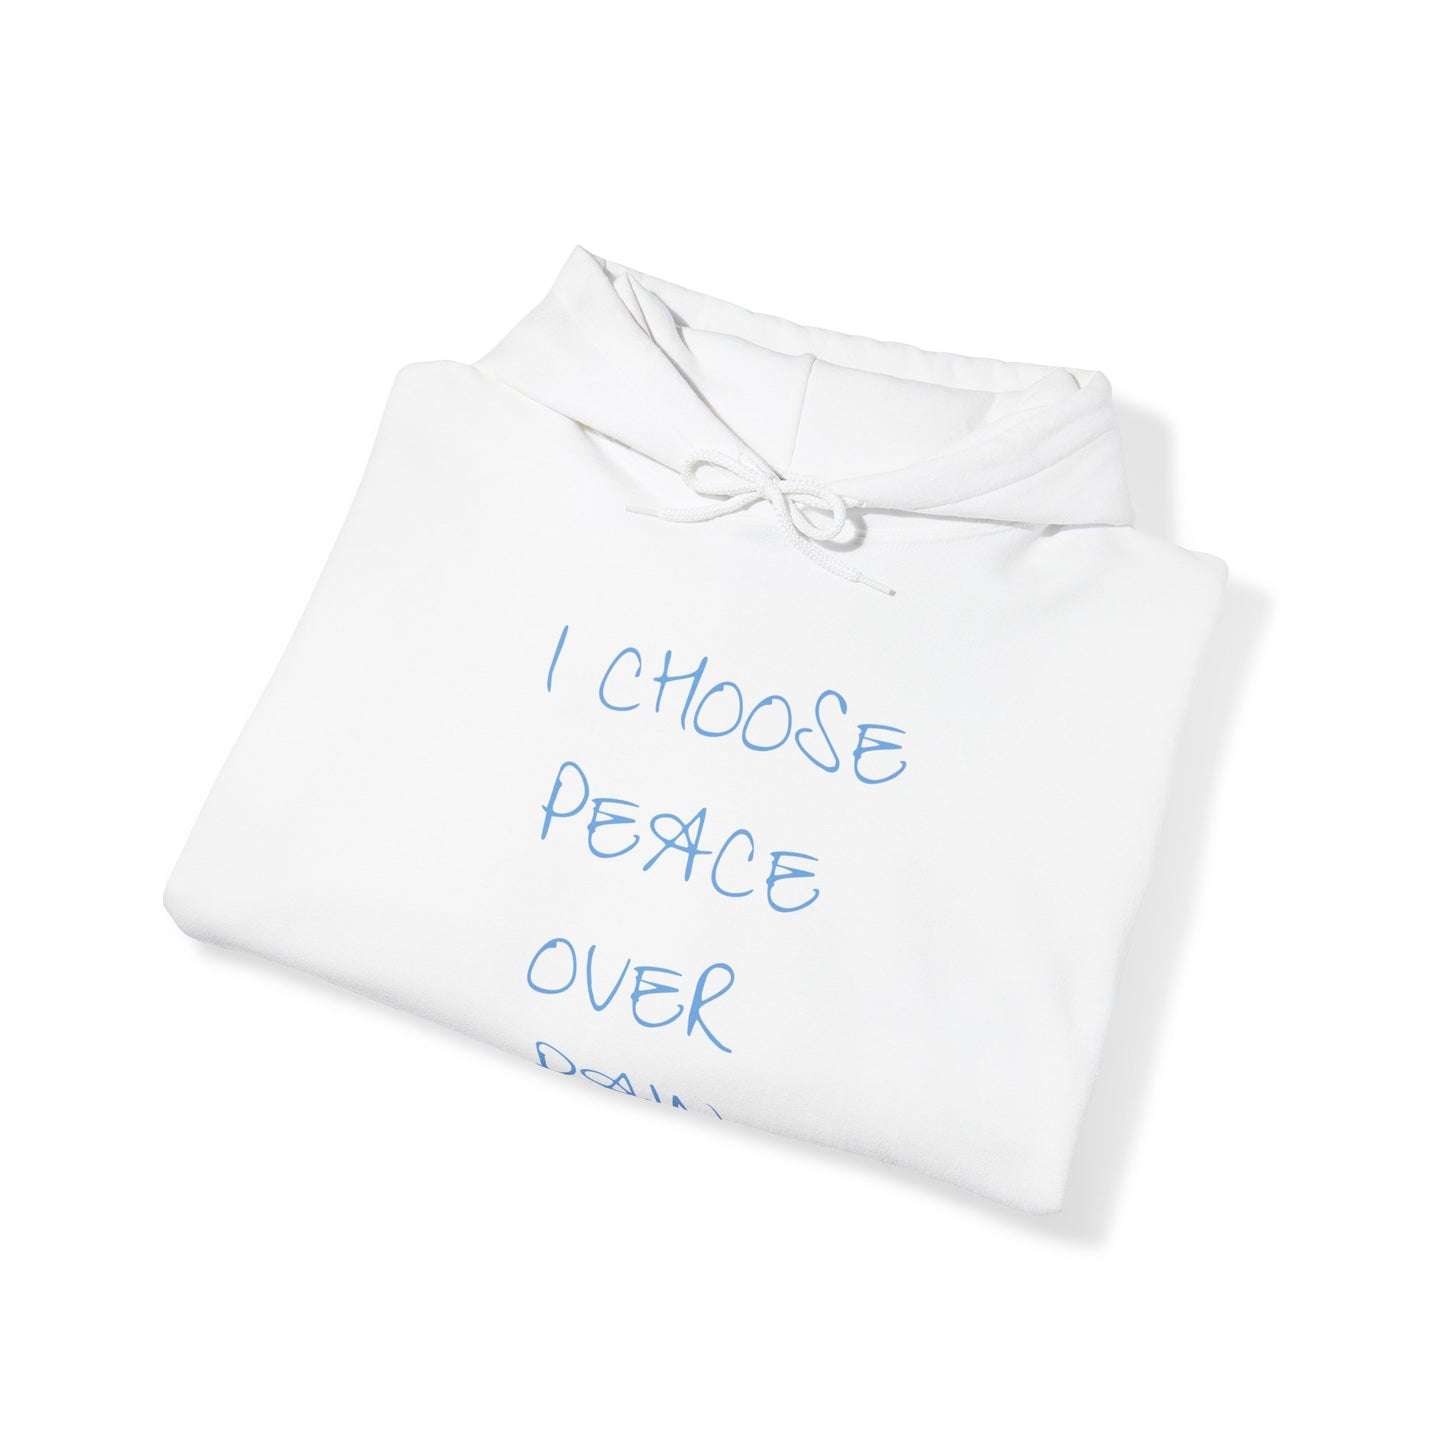 I Choose Peace Over Pain Hoodie Sweatshirt